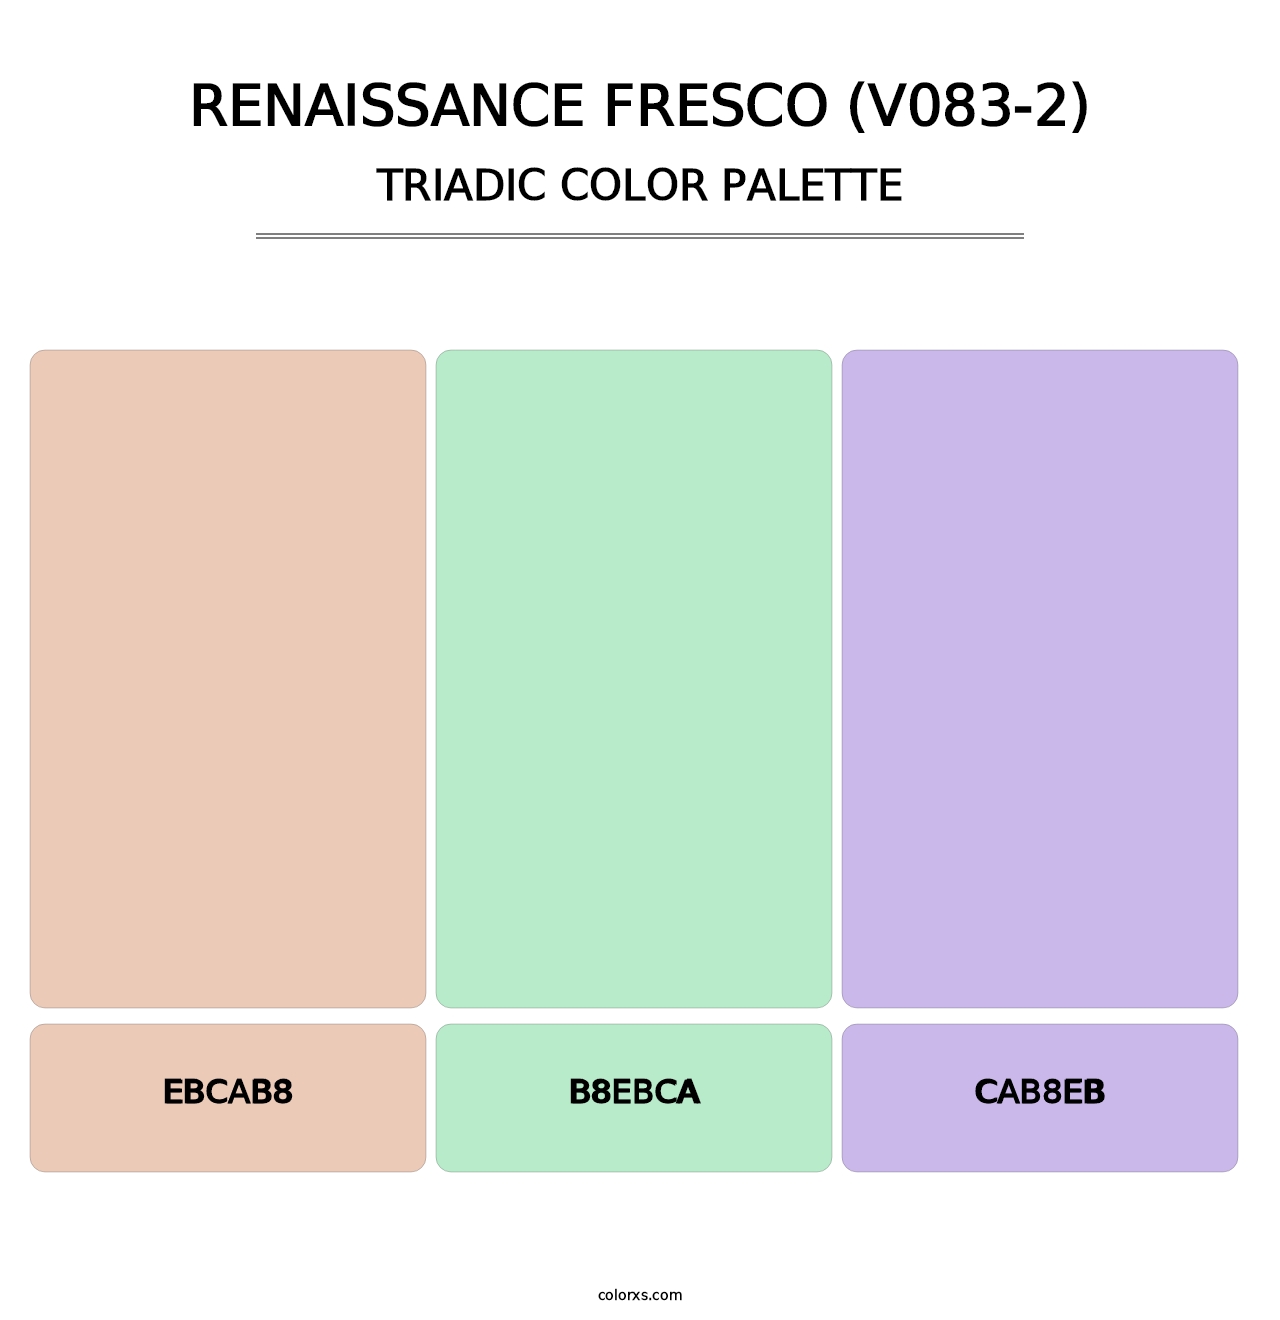 Renaissance Fresco (V083-2) - Triadic Color Palette